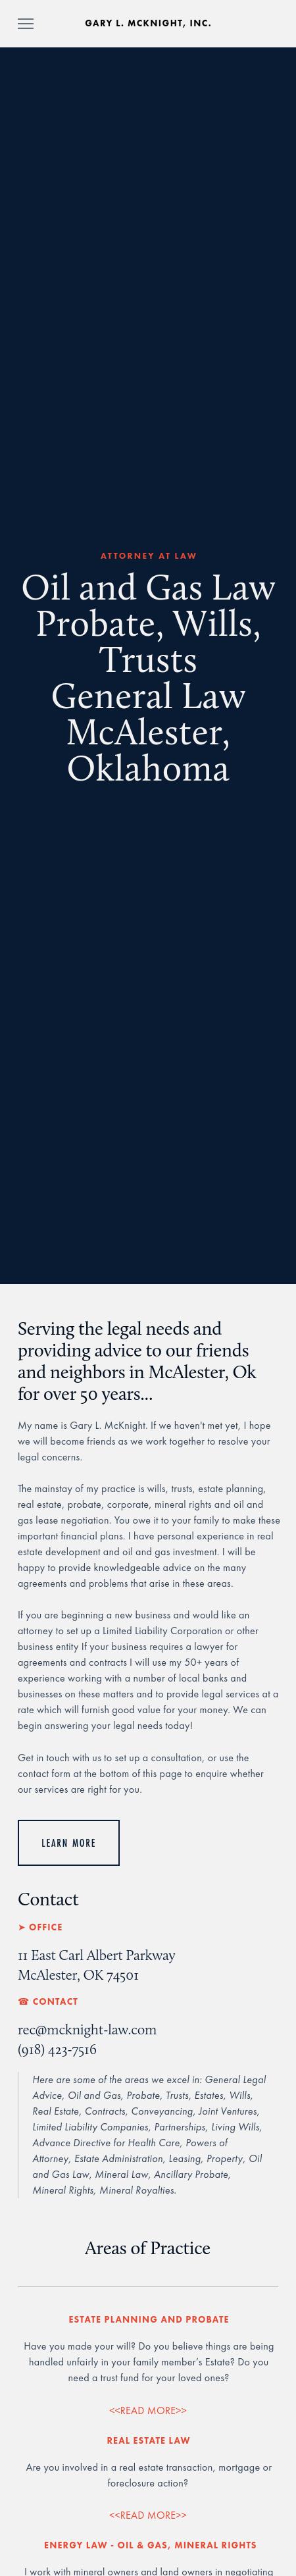 Gary L. McKnight, Inc. - McAlester OK Lawyers